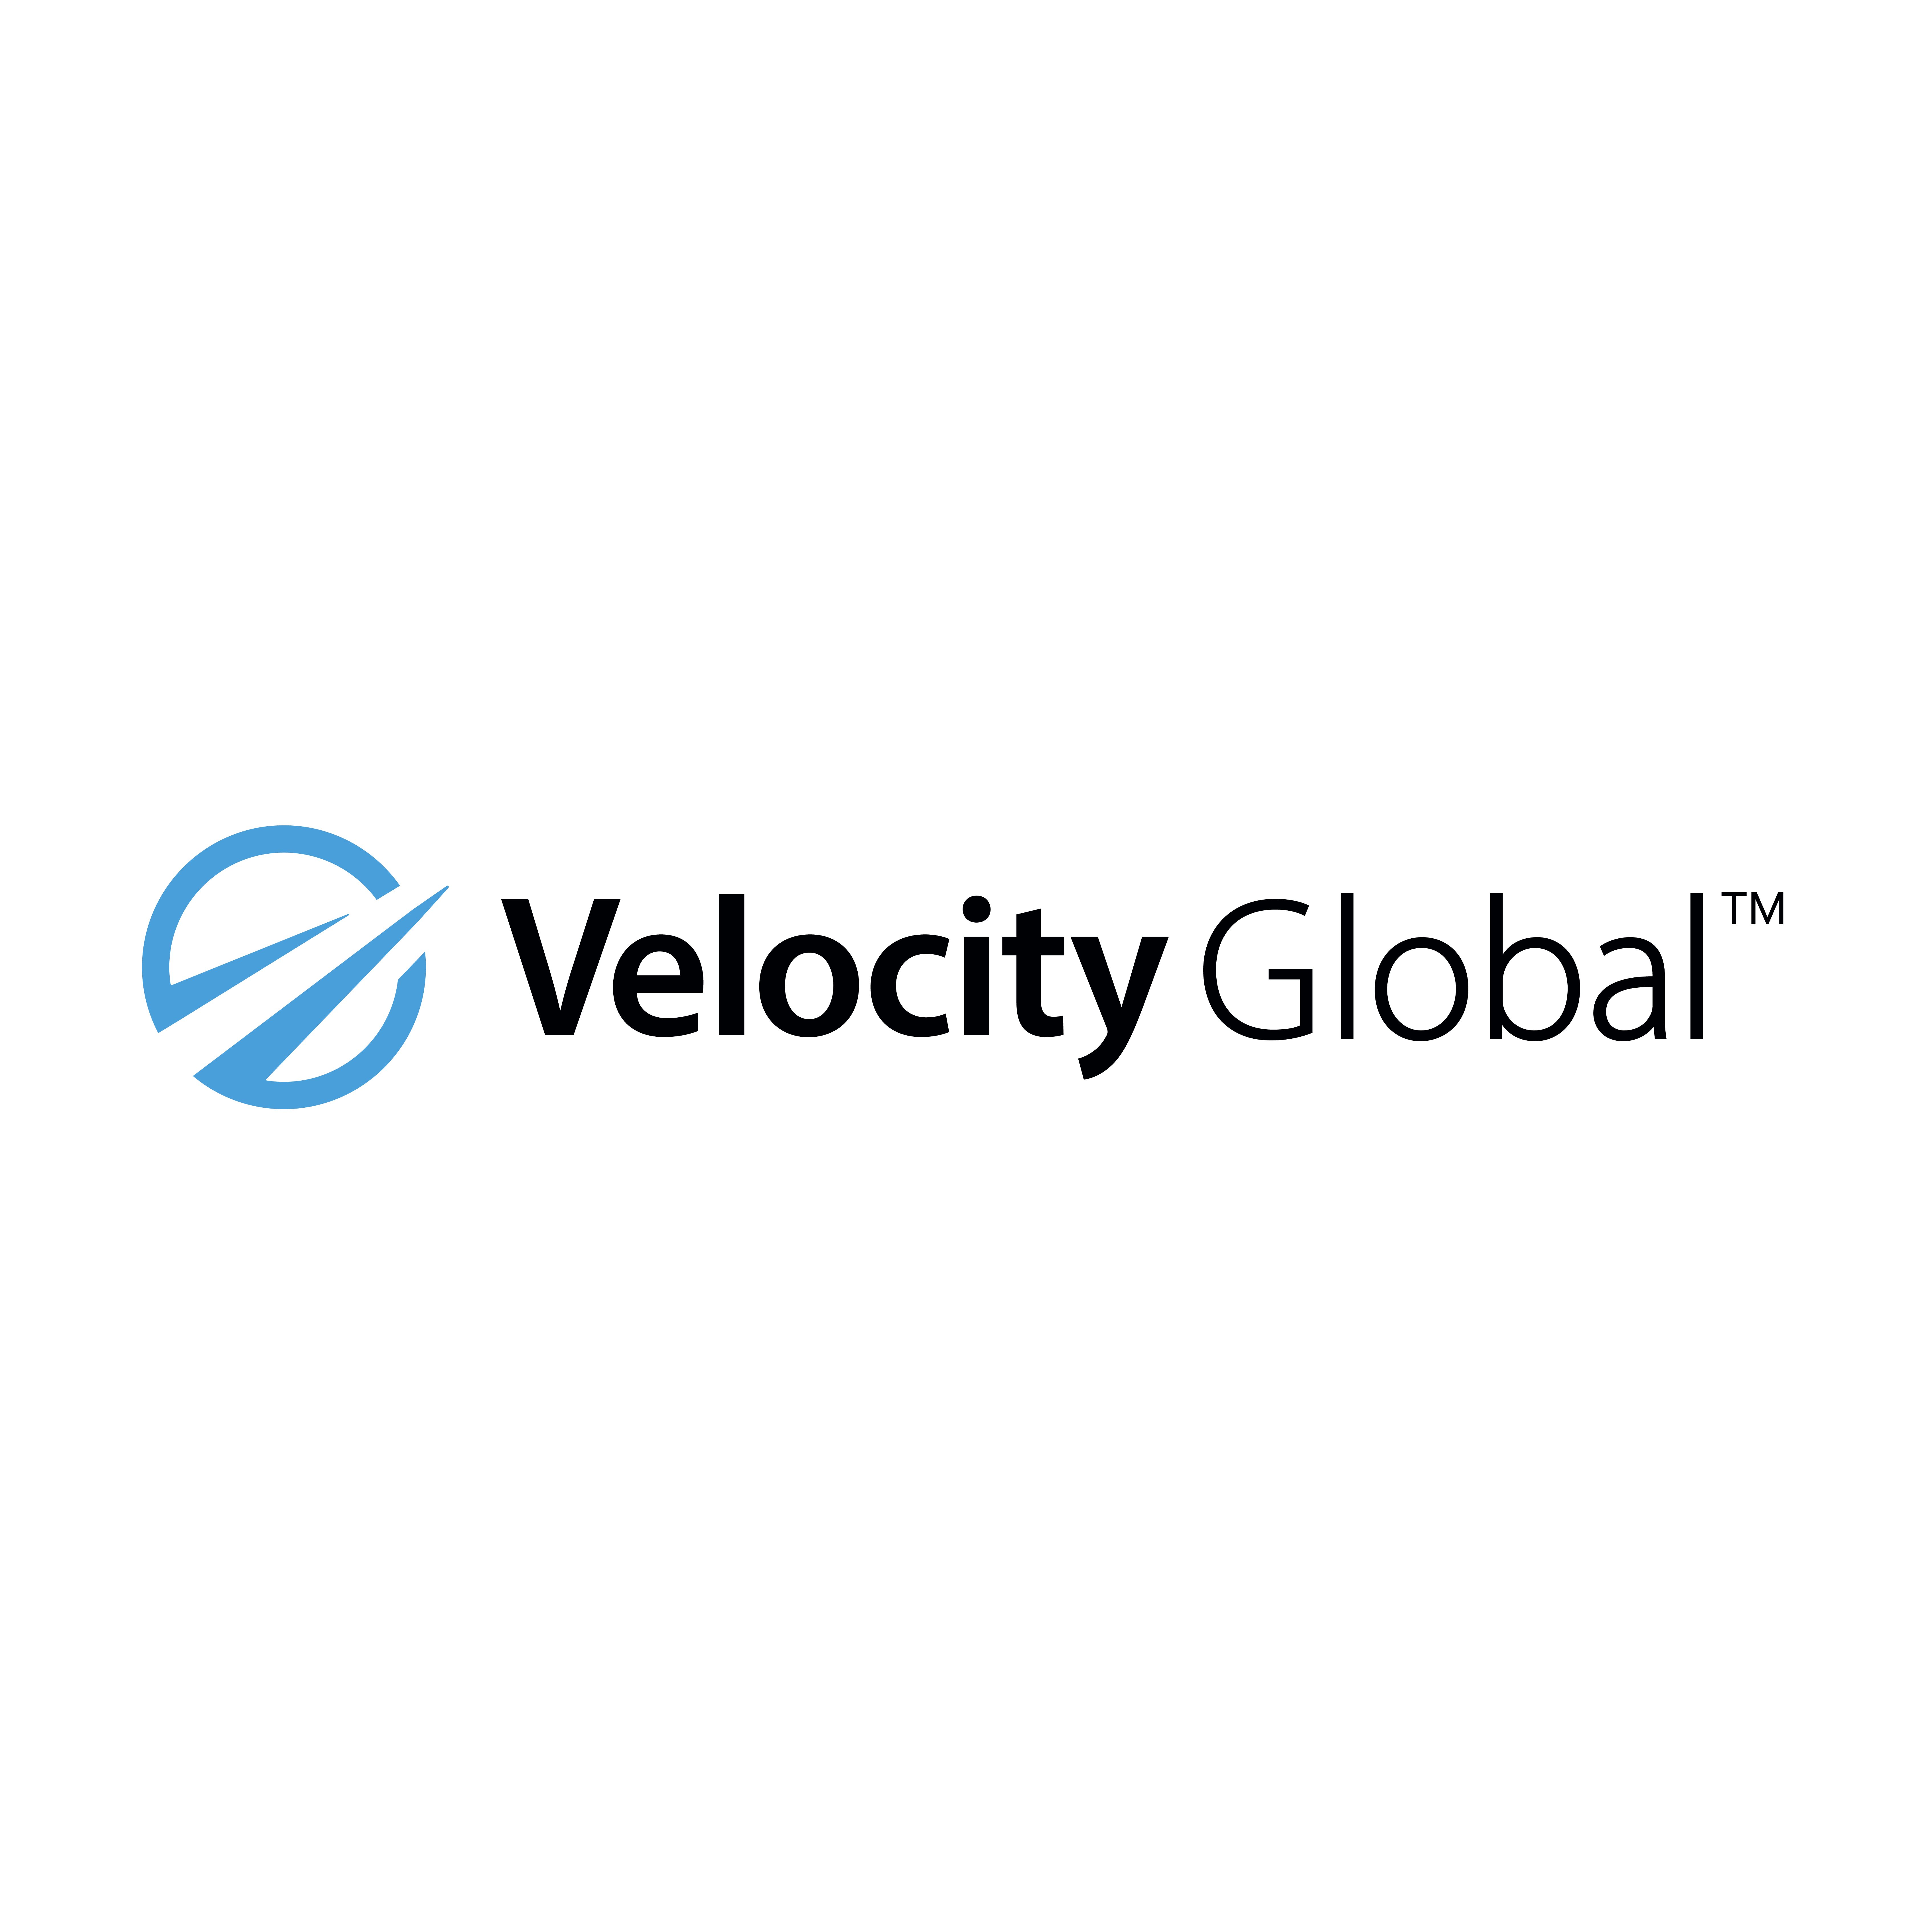 Логотип велосити. Velocity Global svg logo. Global Business solutions logo. Getting Global. Interactive index